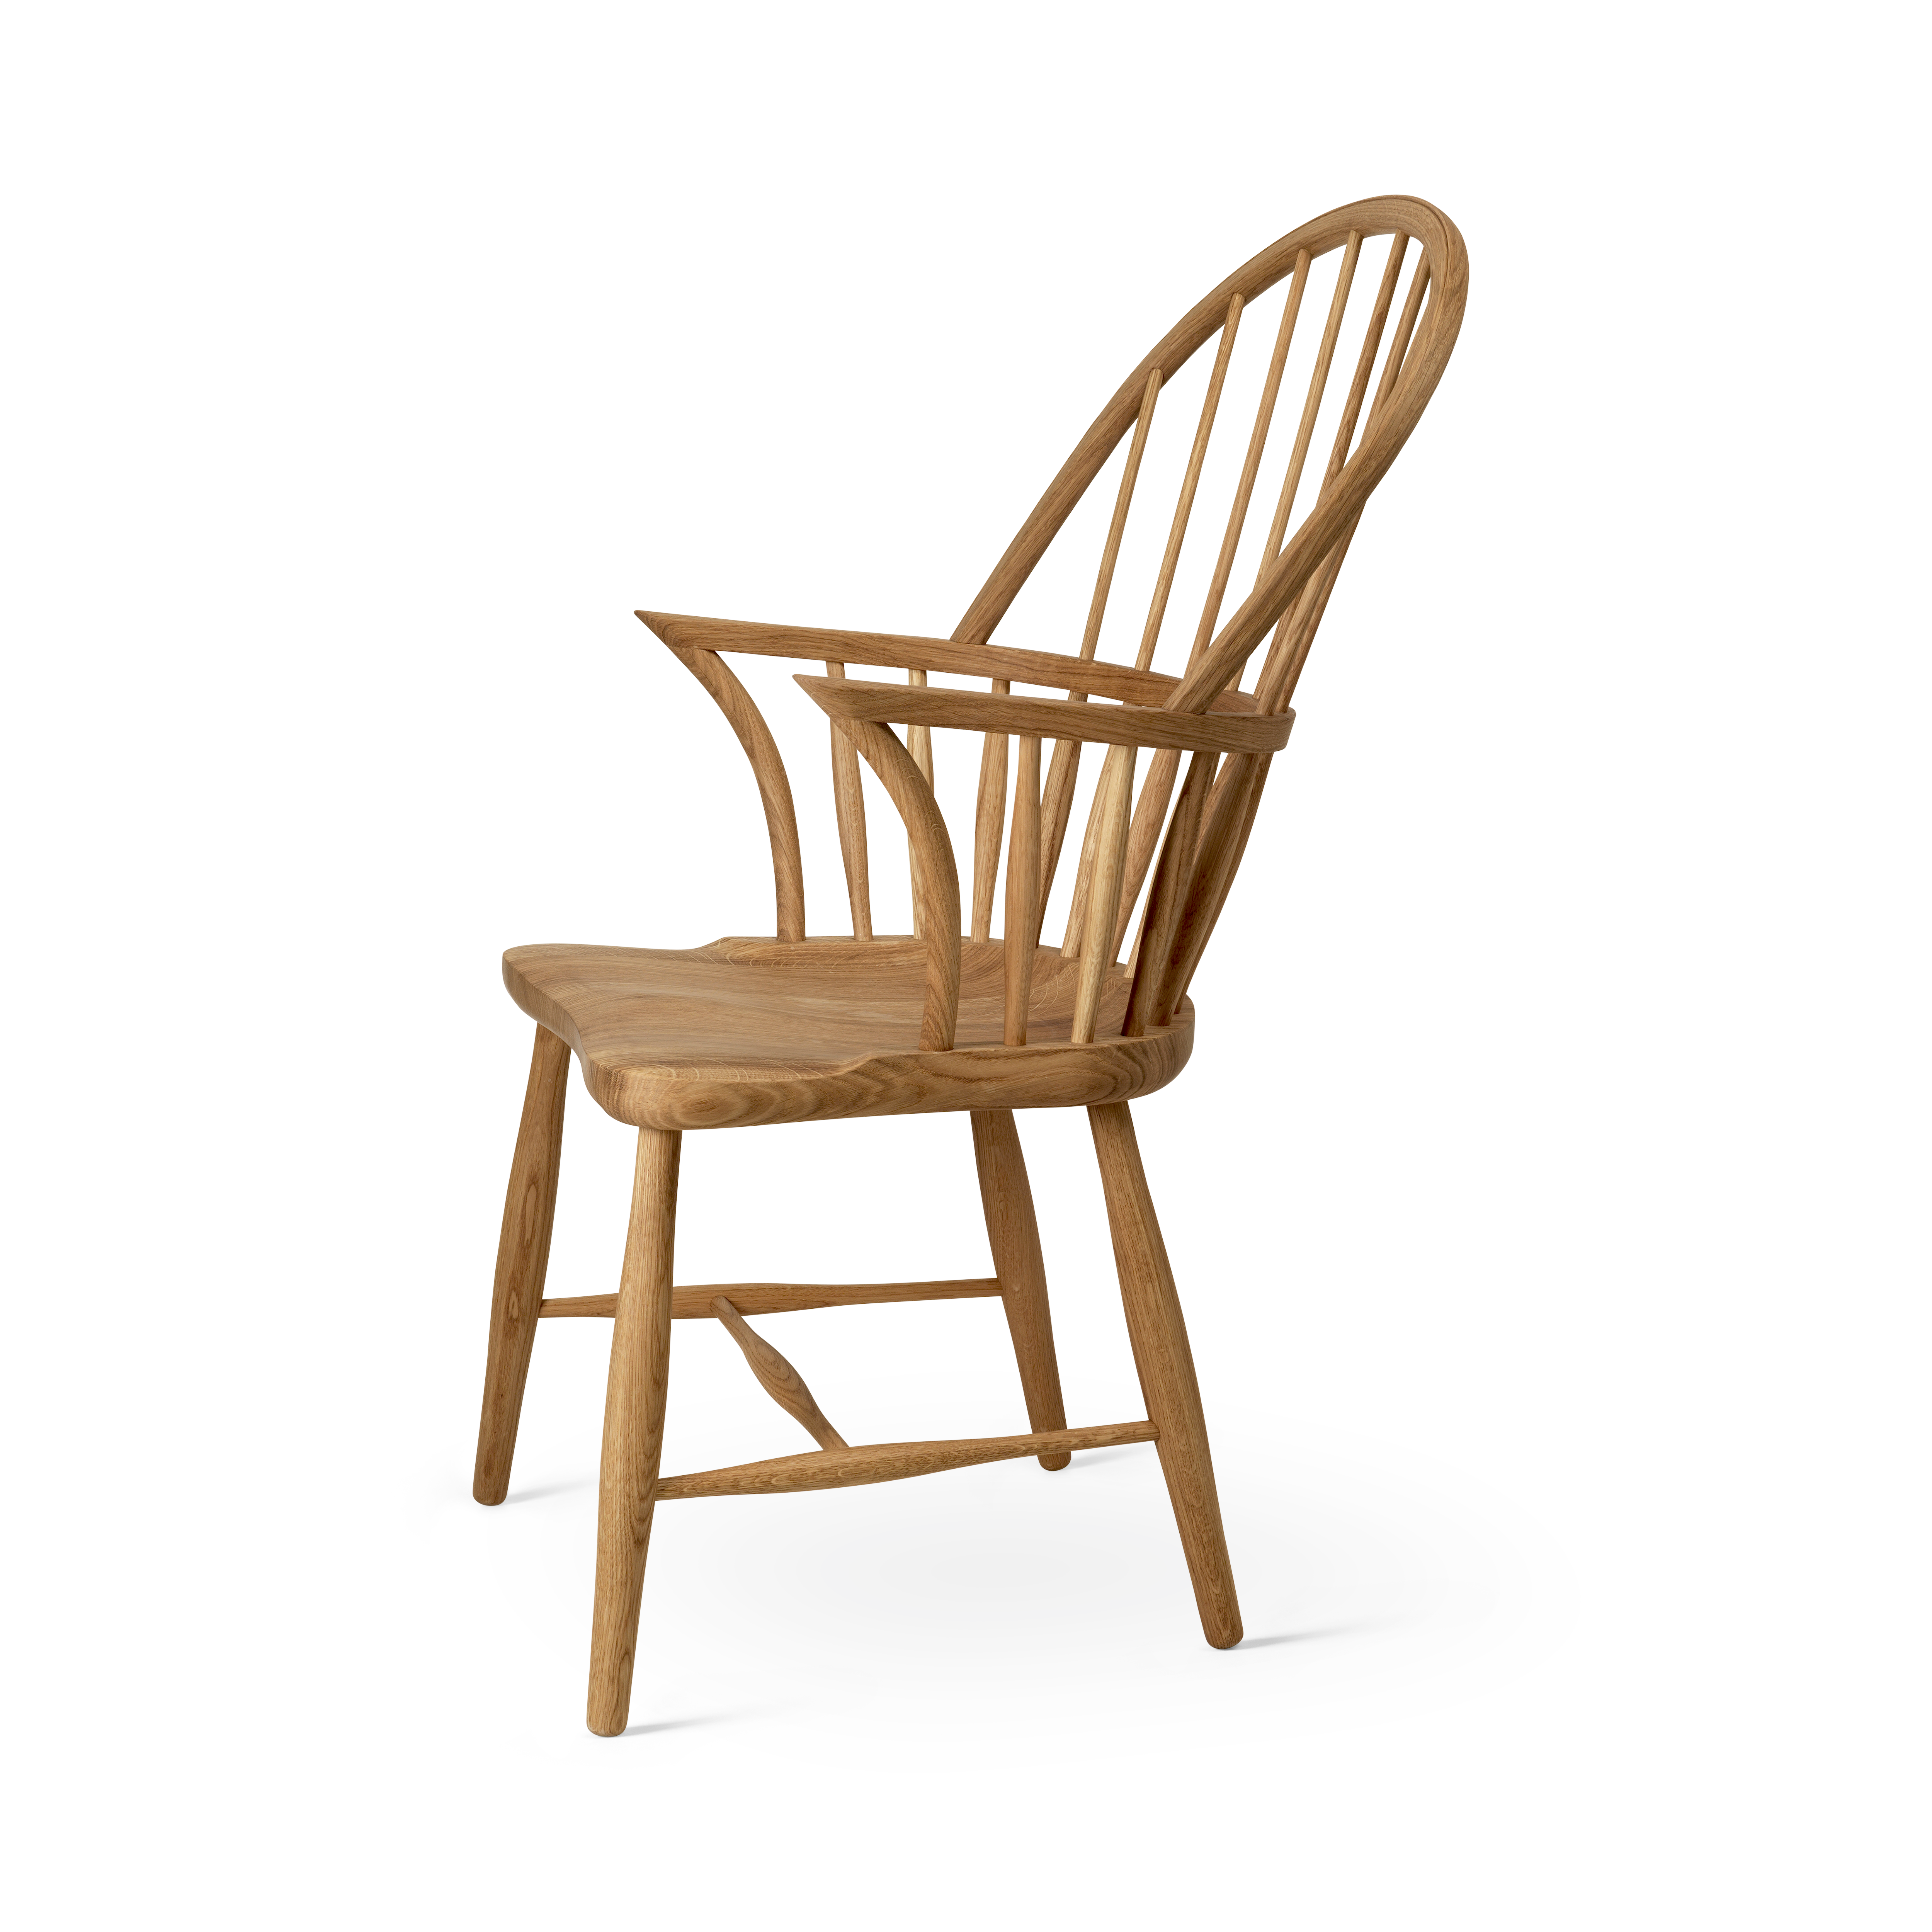 FH38 | Chair designed by Frits Henningsen | Carl Hansen & Søn